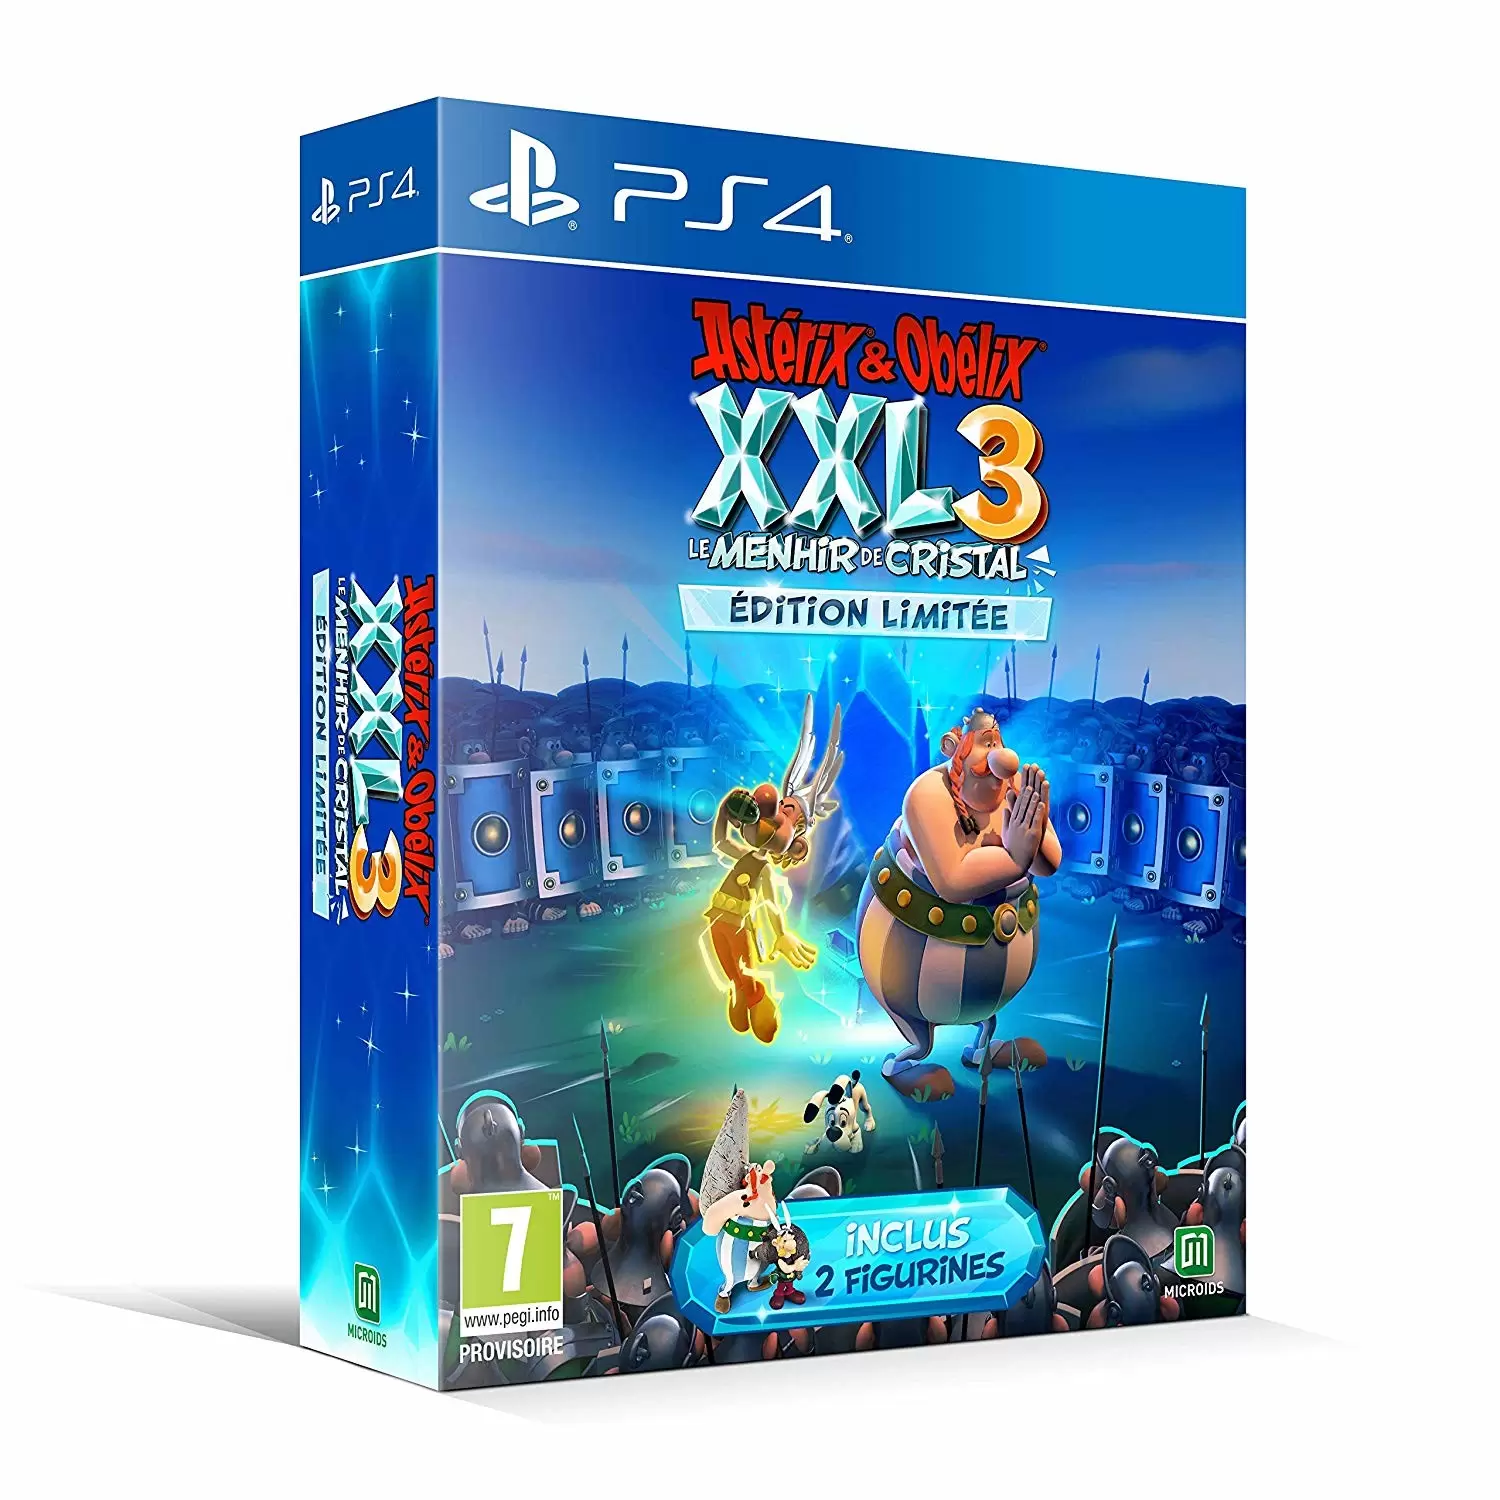 PS4 Games - Astérix & Obélix XXL 3 : le Menhir de Cristal - Edition Limitée